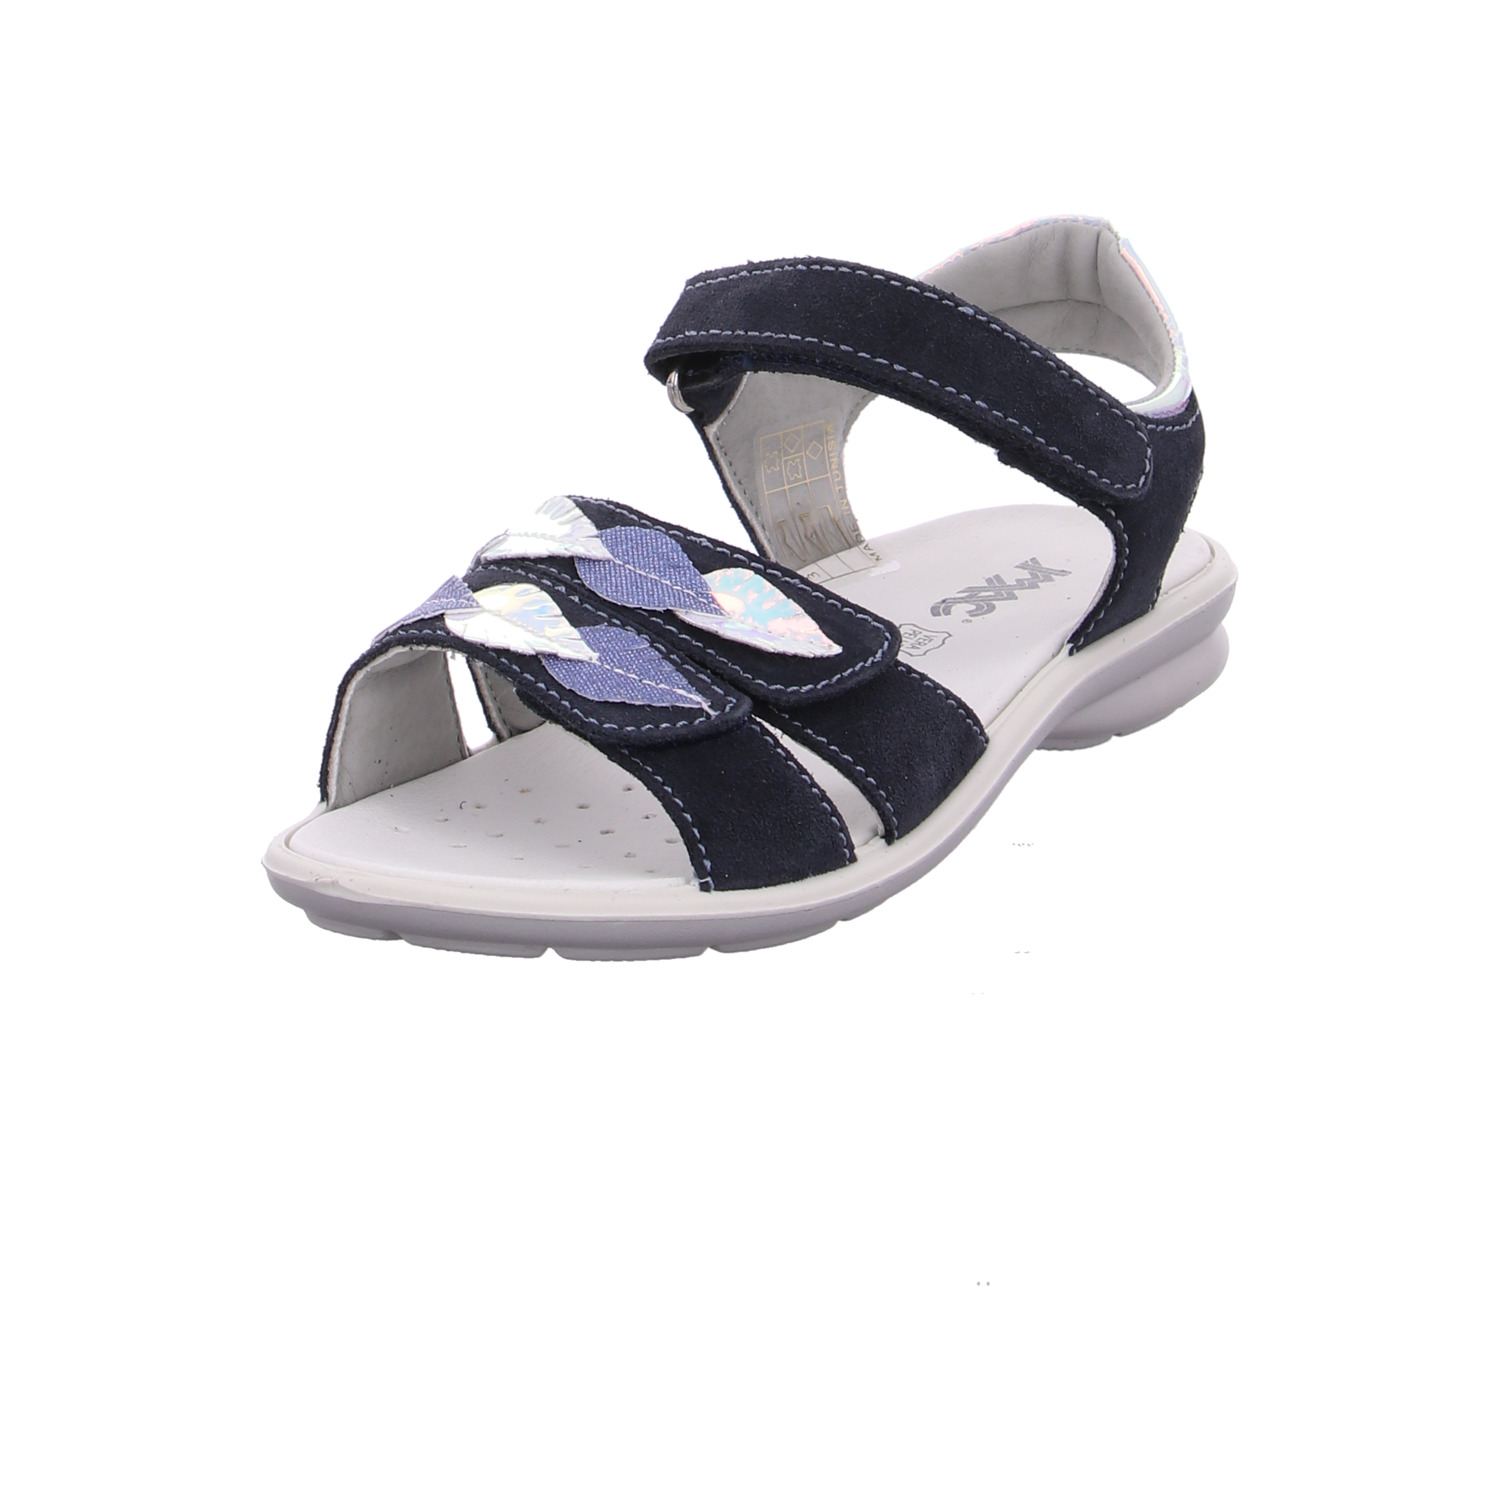 imac-kinder-sandaletten-mädchen-blau-125001-25